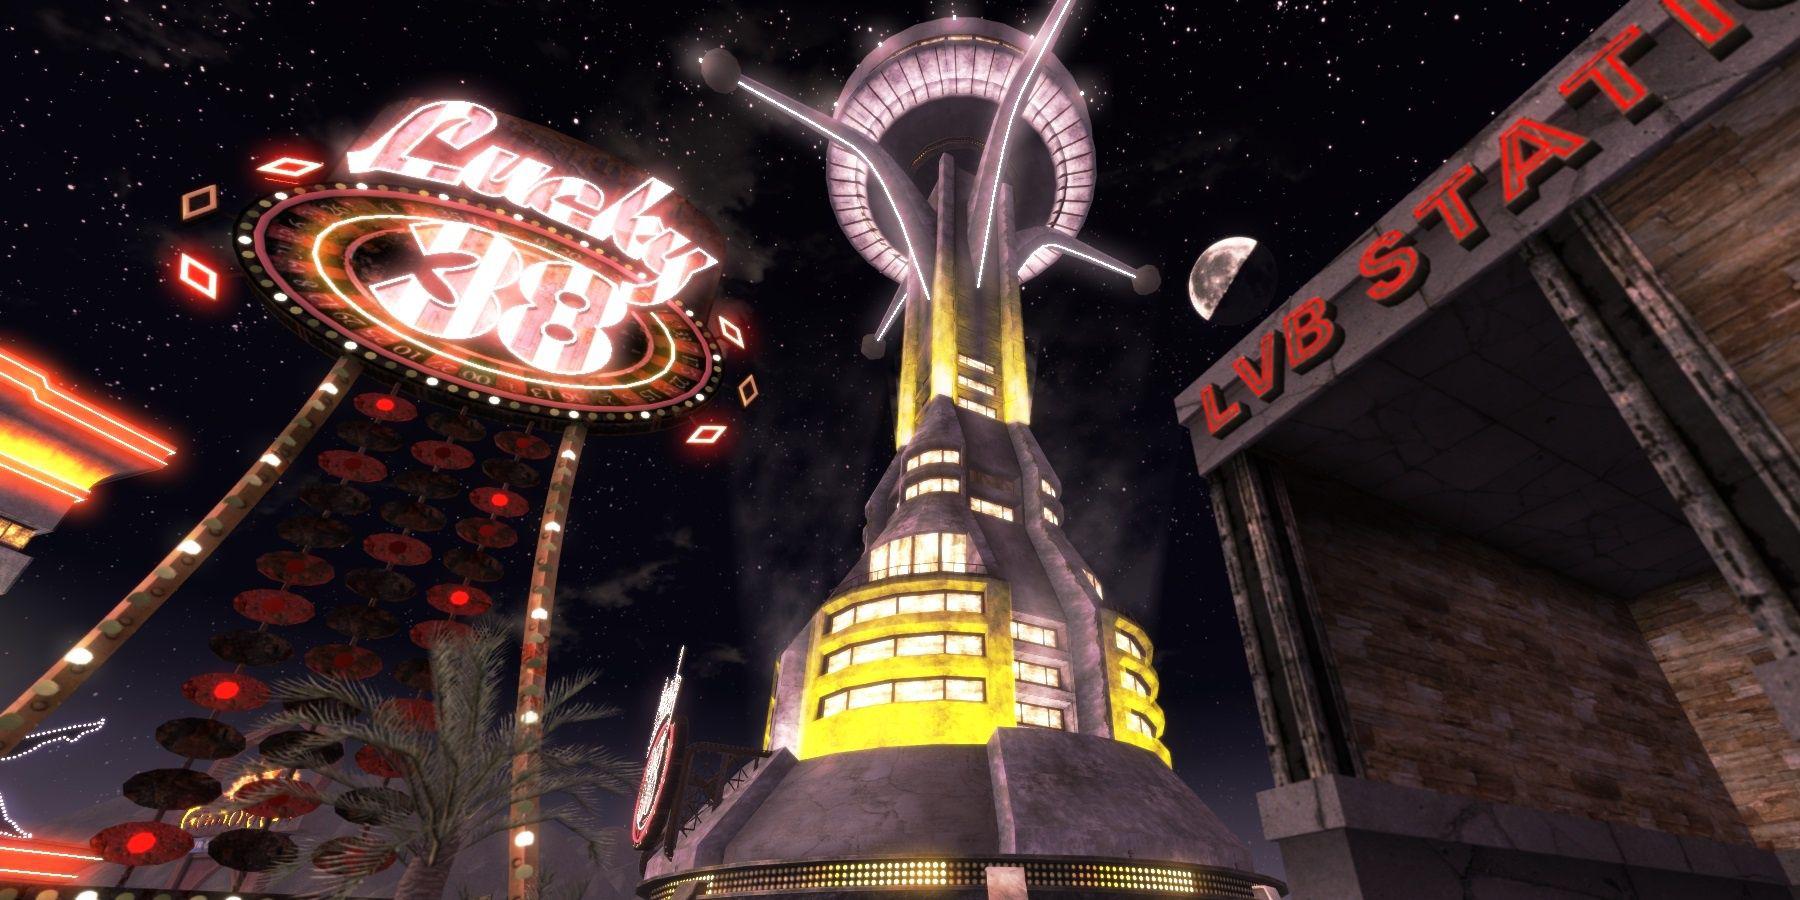 O Lucky 38 Casino de Fallout: New Vegas à noite